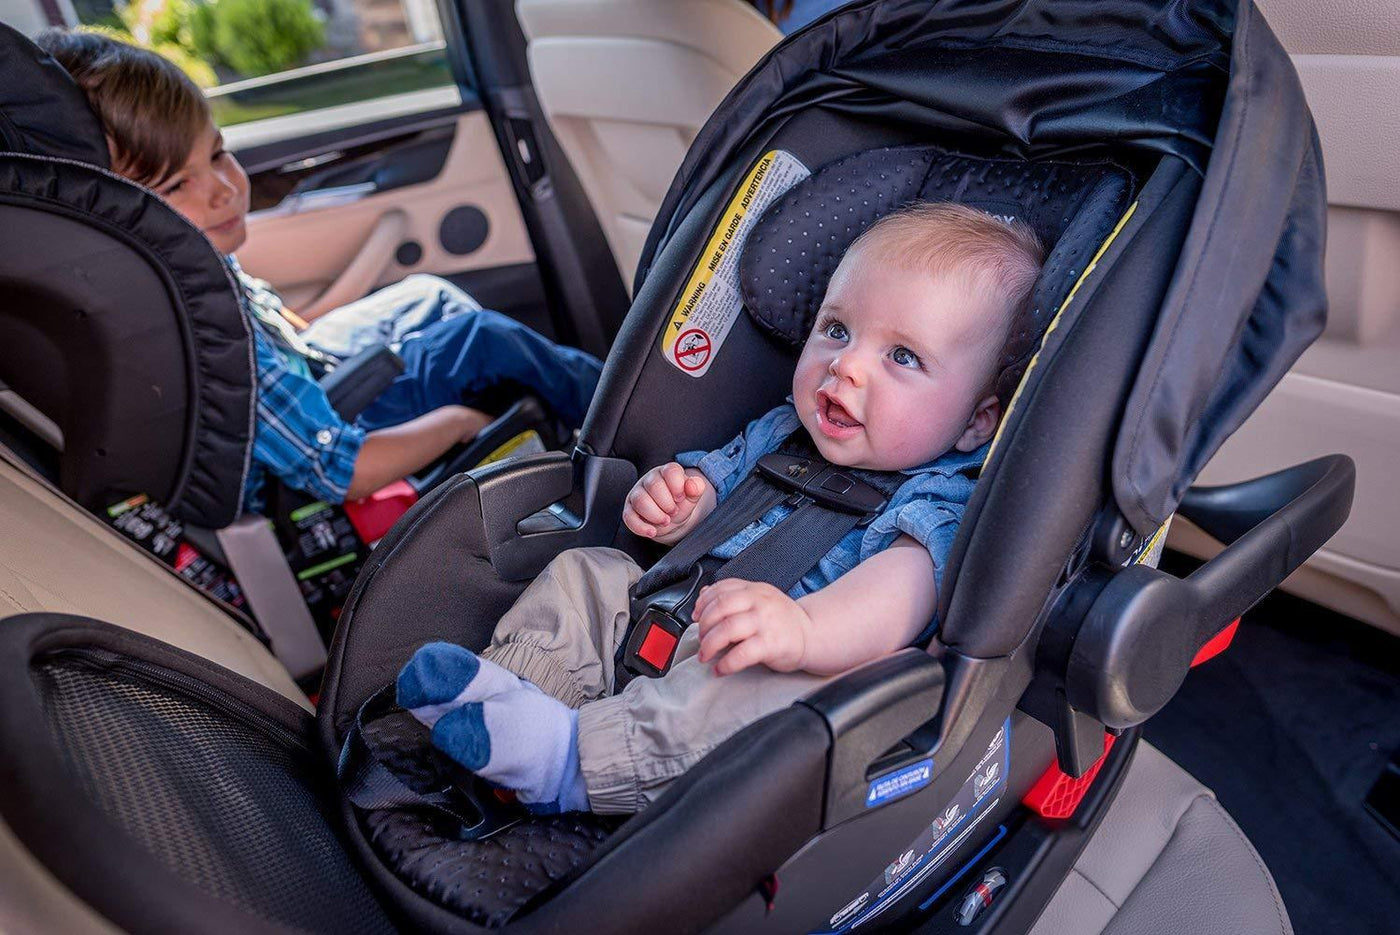 britax car seat newborn